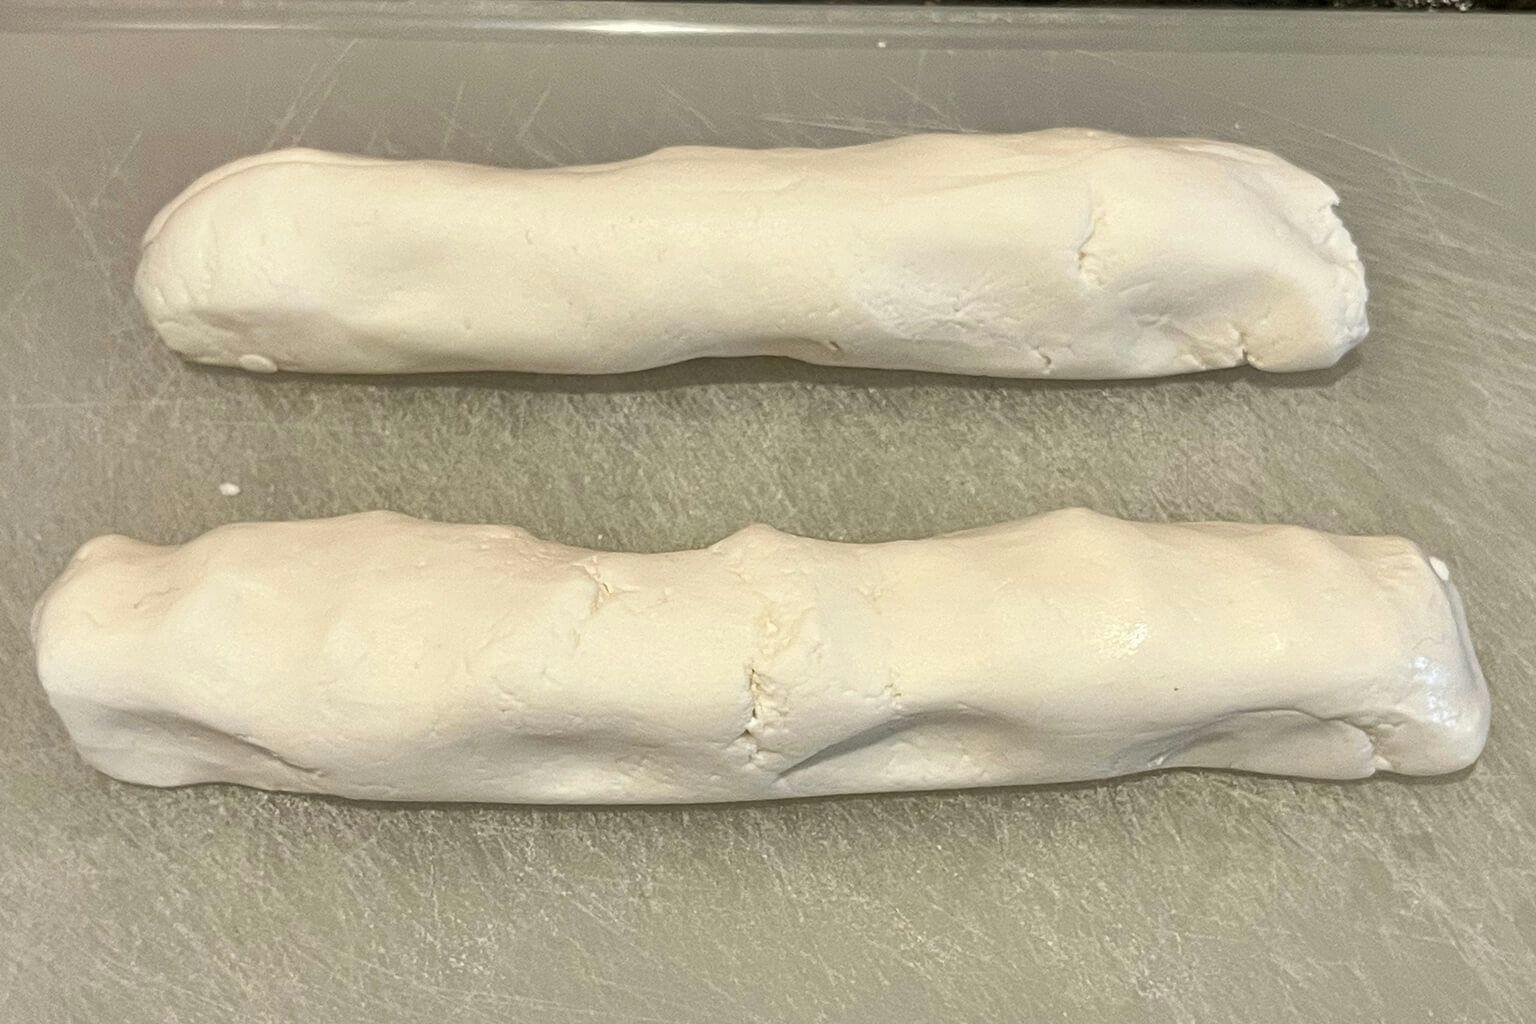 Roll dough into a long, tube-like shape